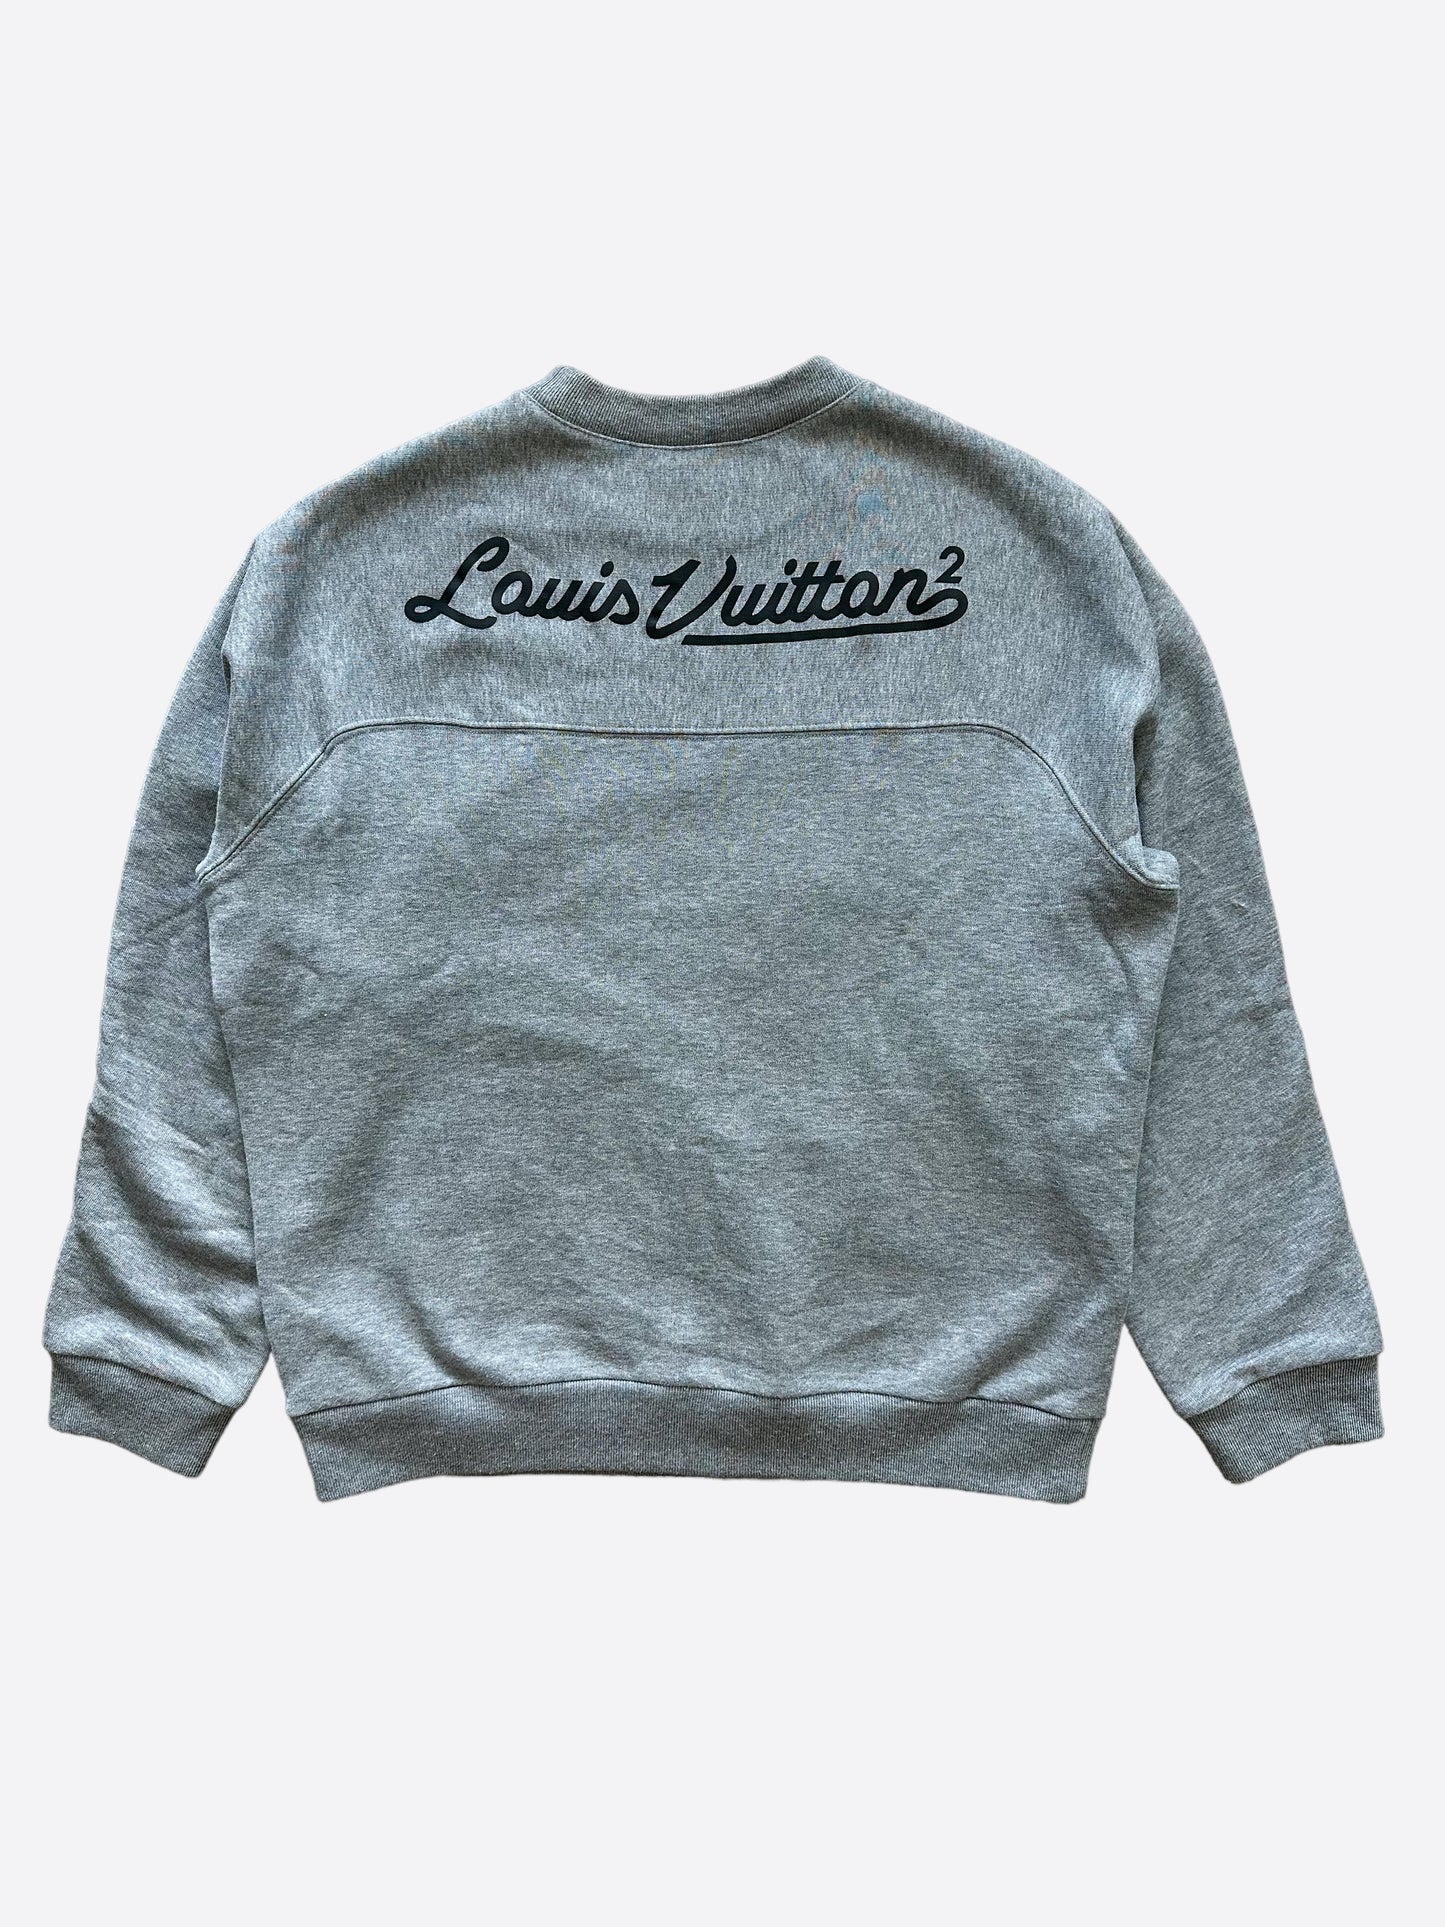 Logo Heart Louis Vuitton Shirt, hoodie, sweater, long sleeve and